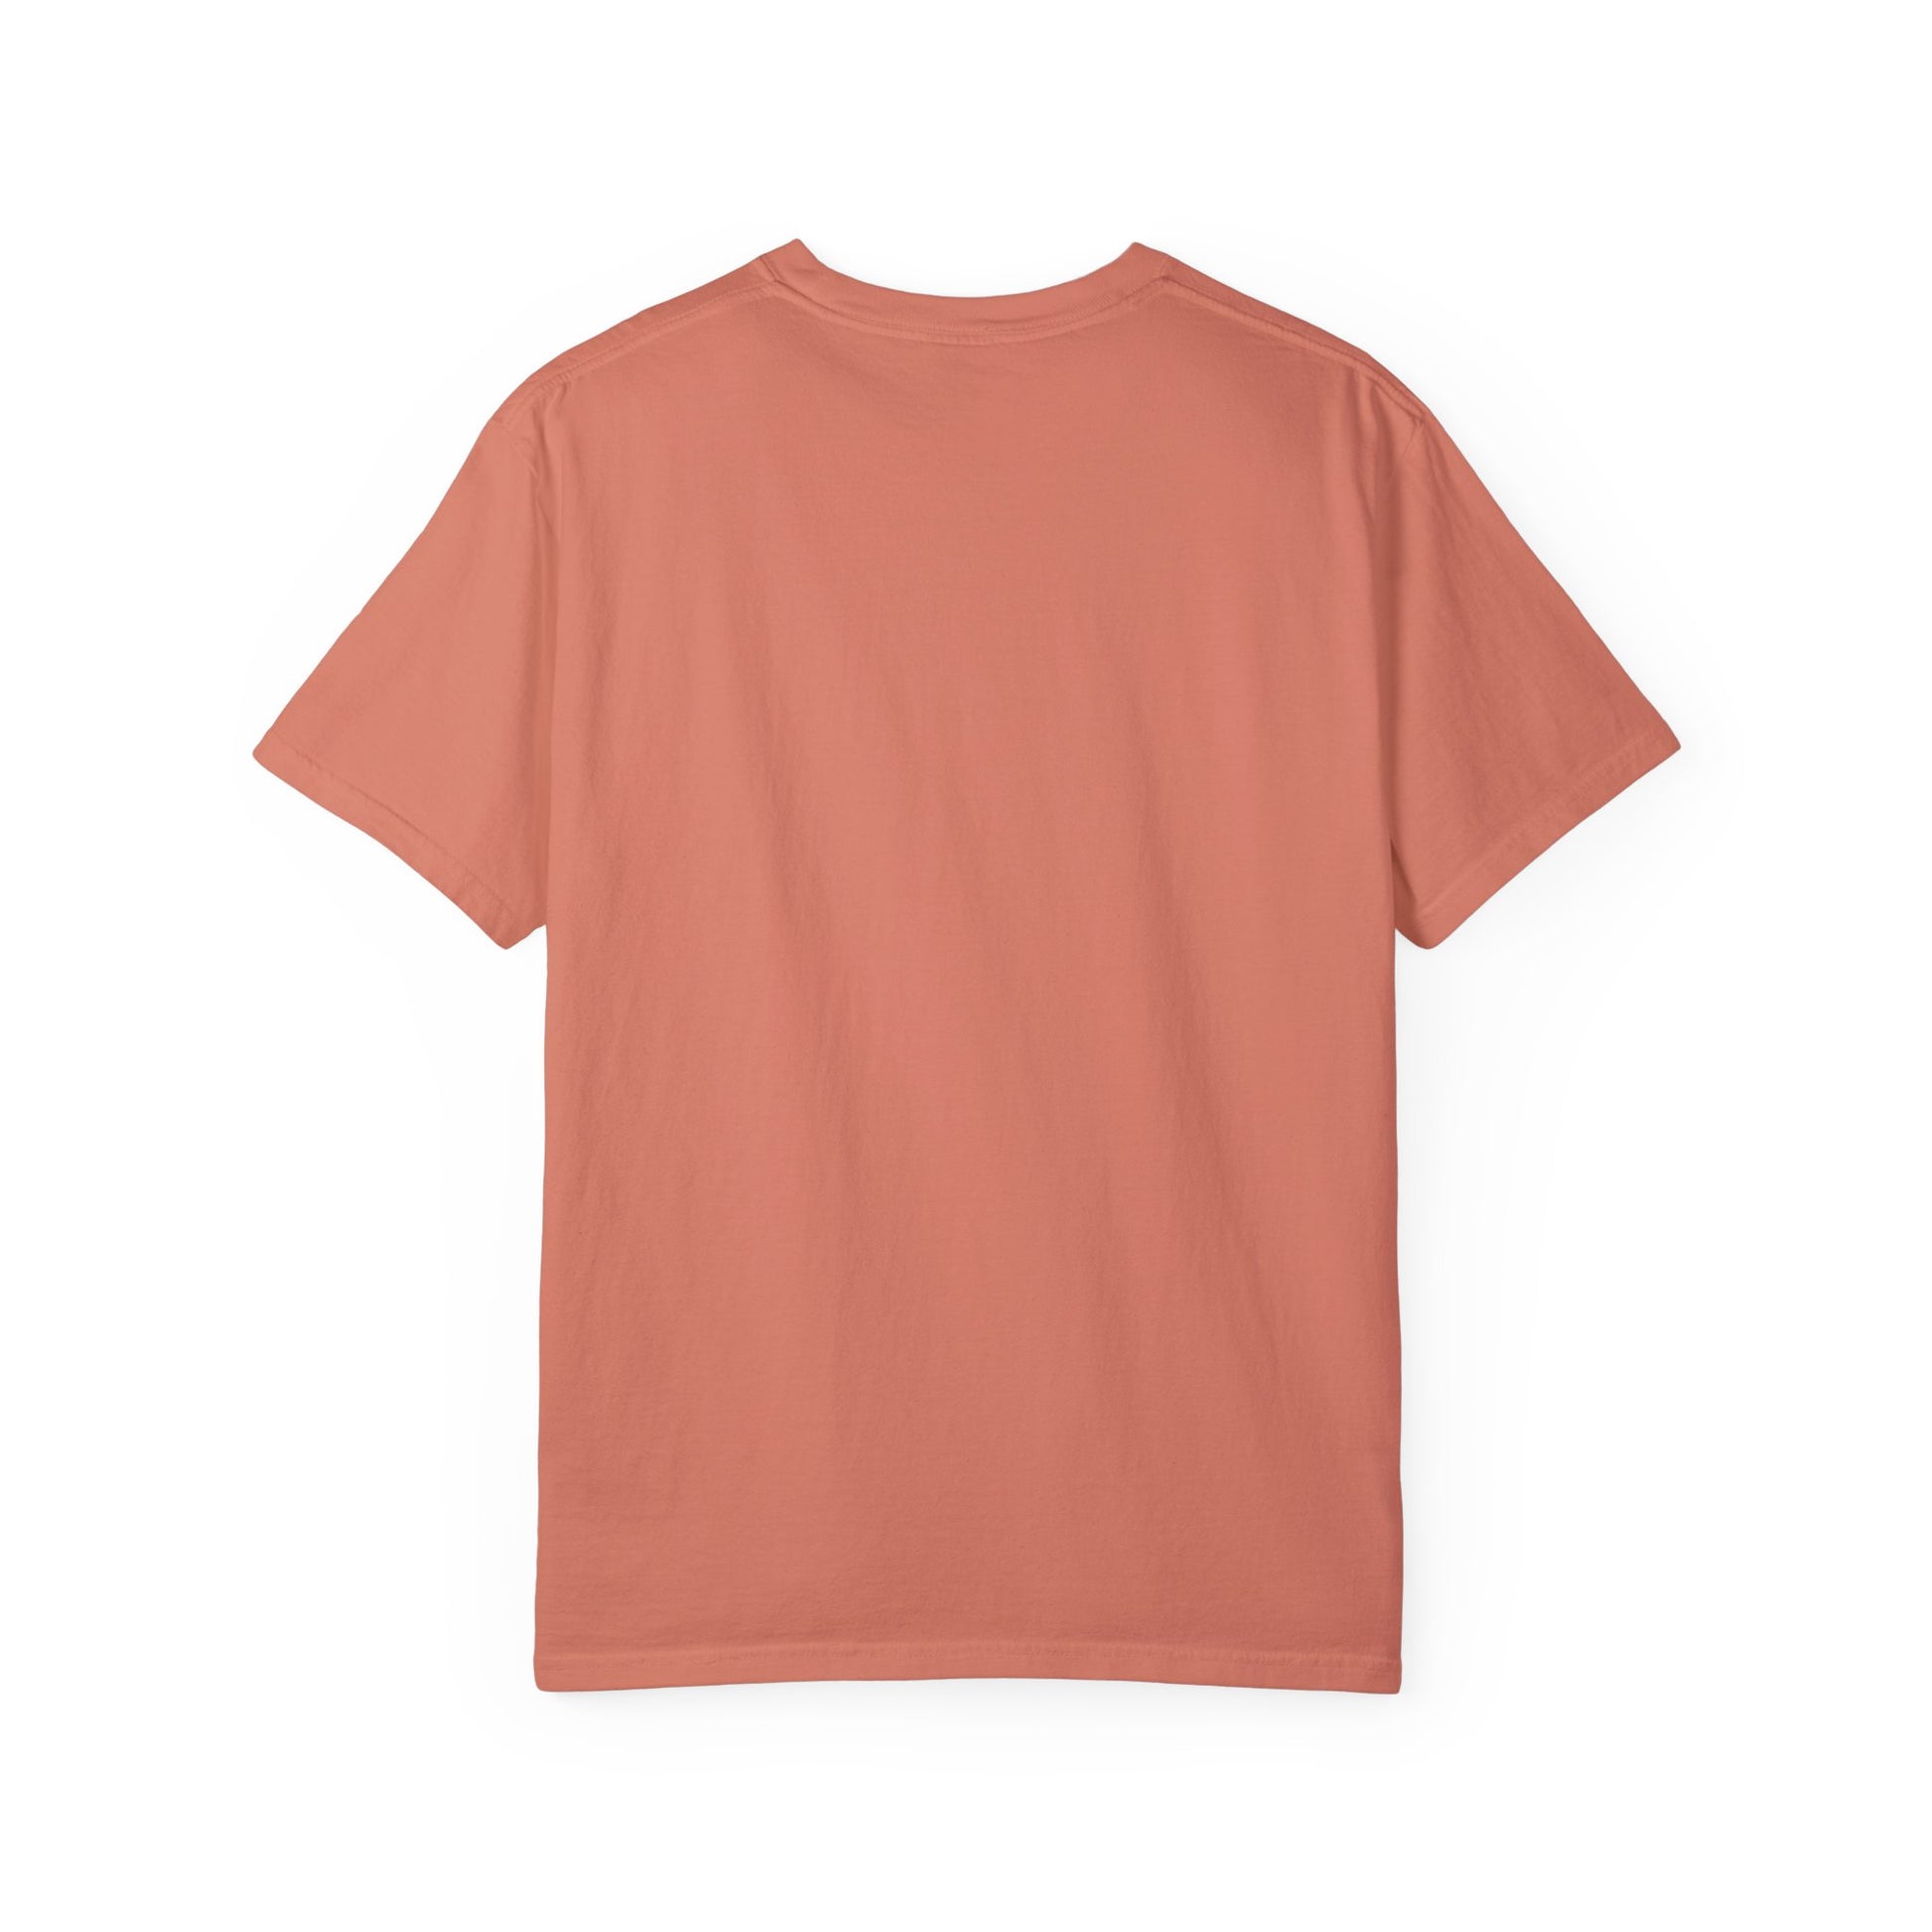 Hip Hop Teddy Bear Graphic Unisex Garment-dyed T-shirt Cotton Funny Humorous Graphic Soft Premium Unisex Men Women Terracotta T-shirt Birthday Gift-55